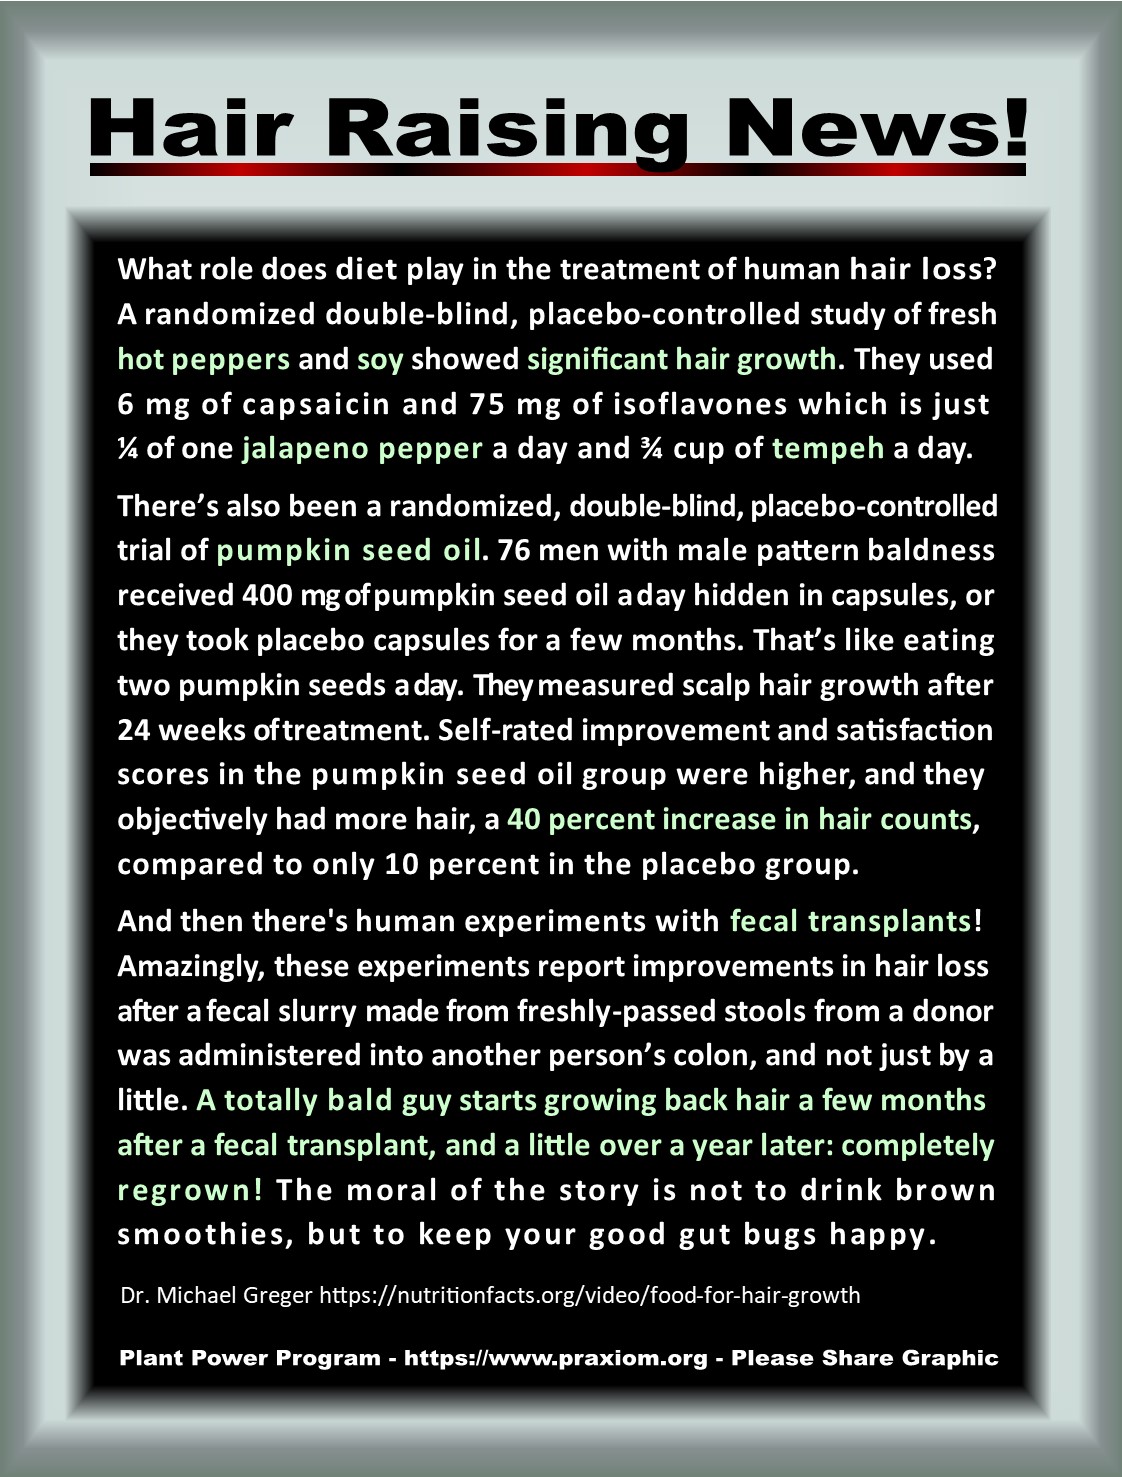 Hair Raising News - Dr. Michael Greger